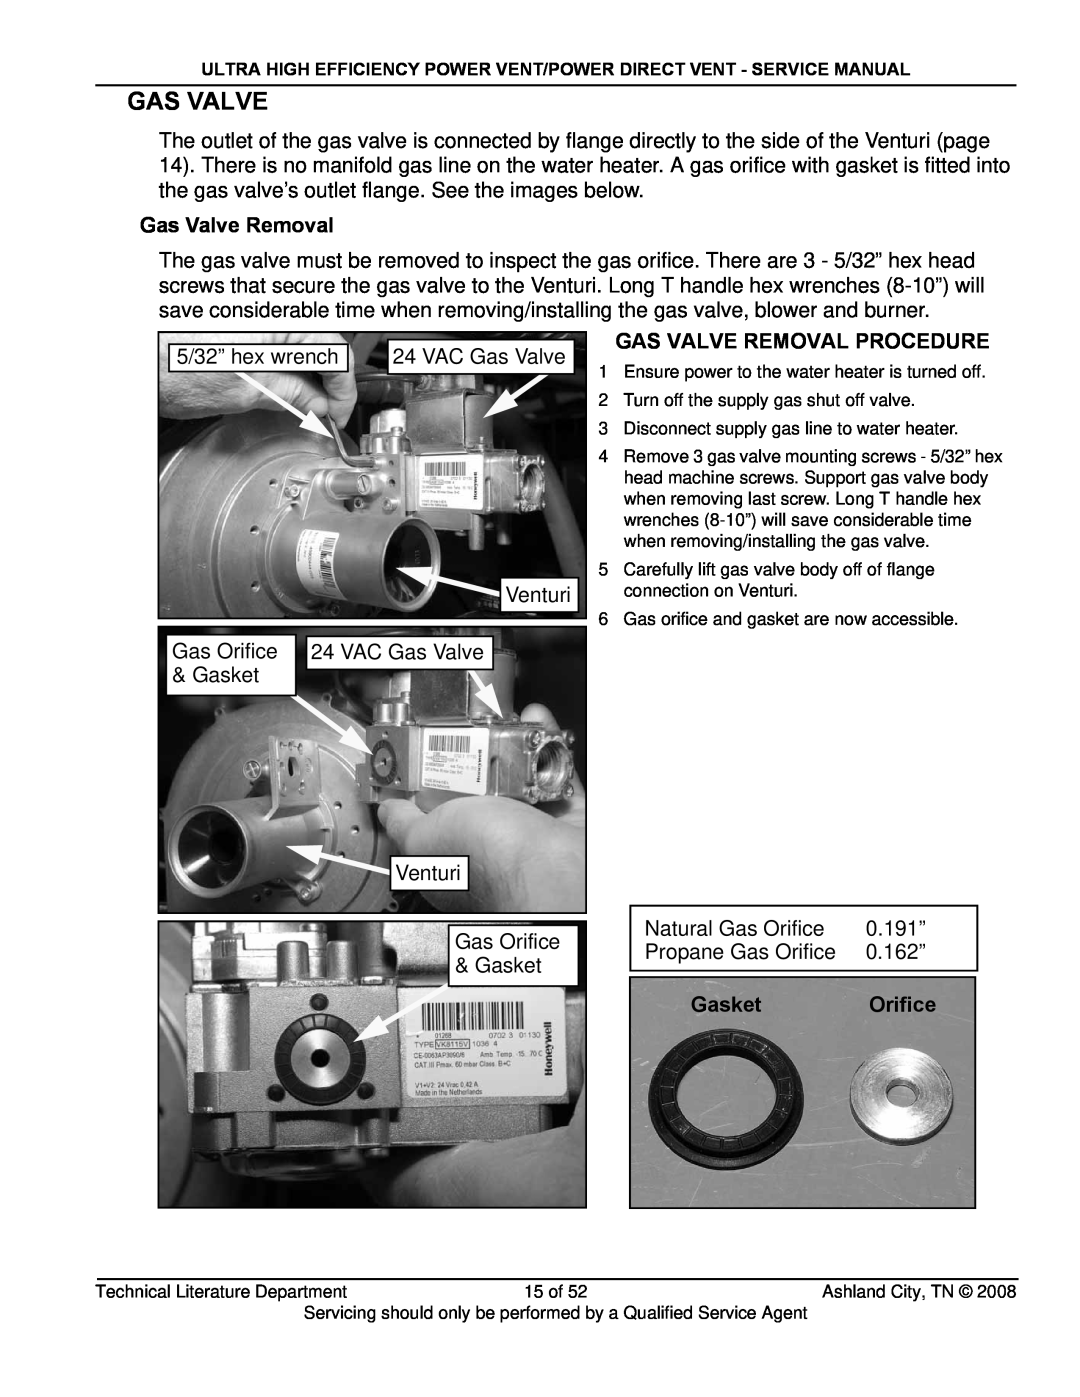 State Industries SHE50-100NE, SHE50-100PE, GP650HTPDT manual Gas Valve Removal Procedure, Gasket, Orifice 